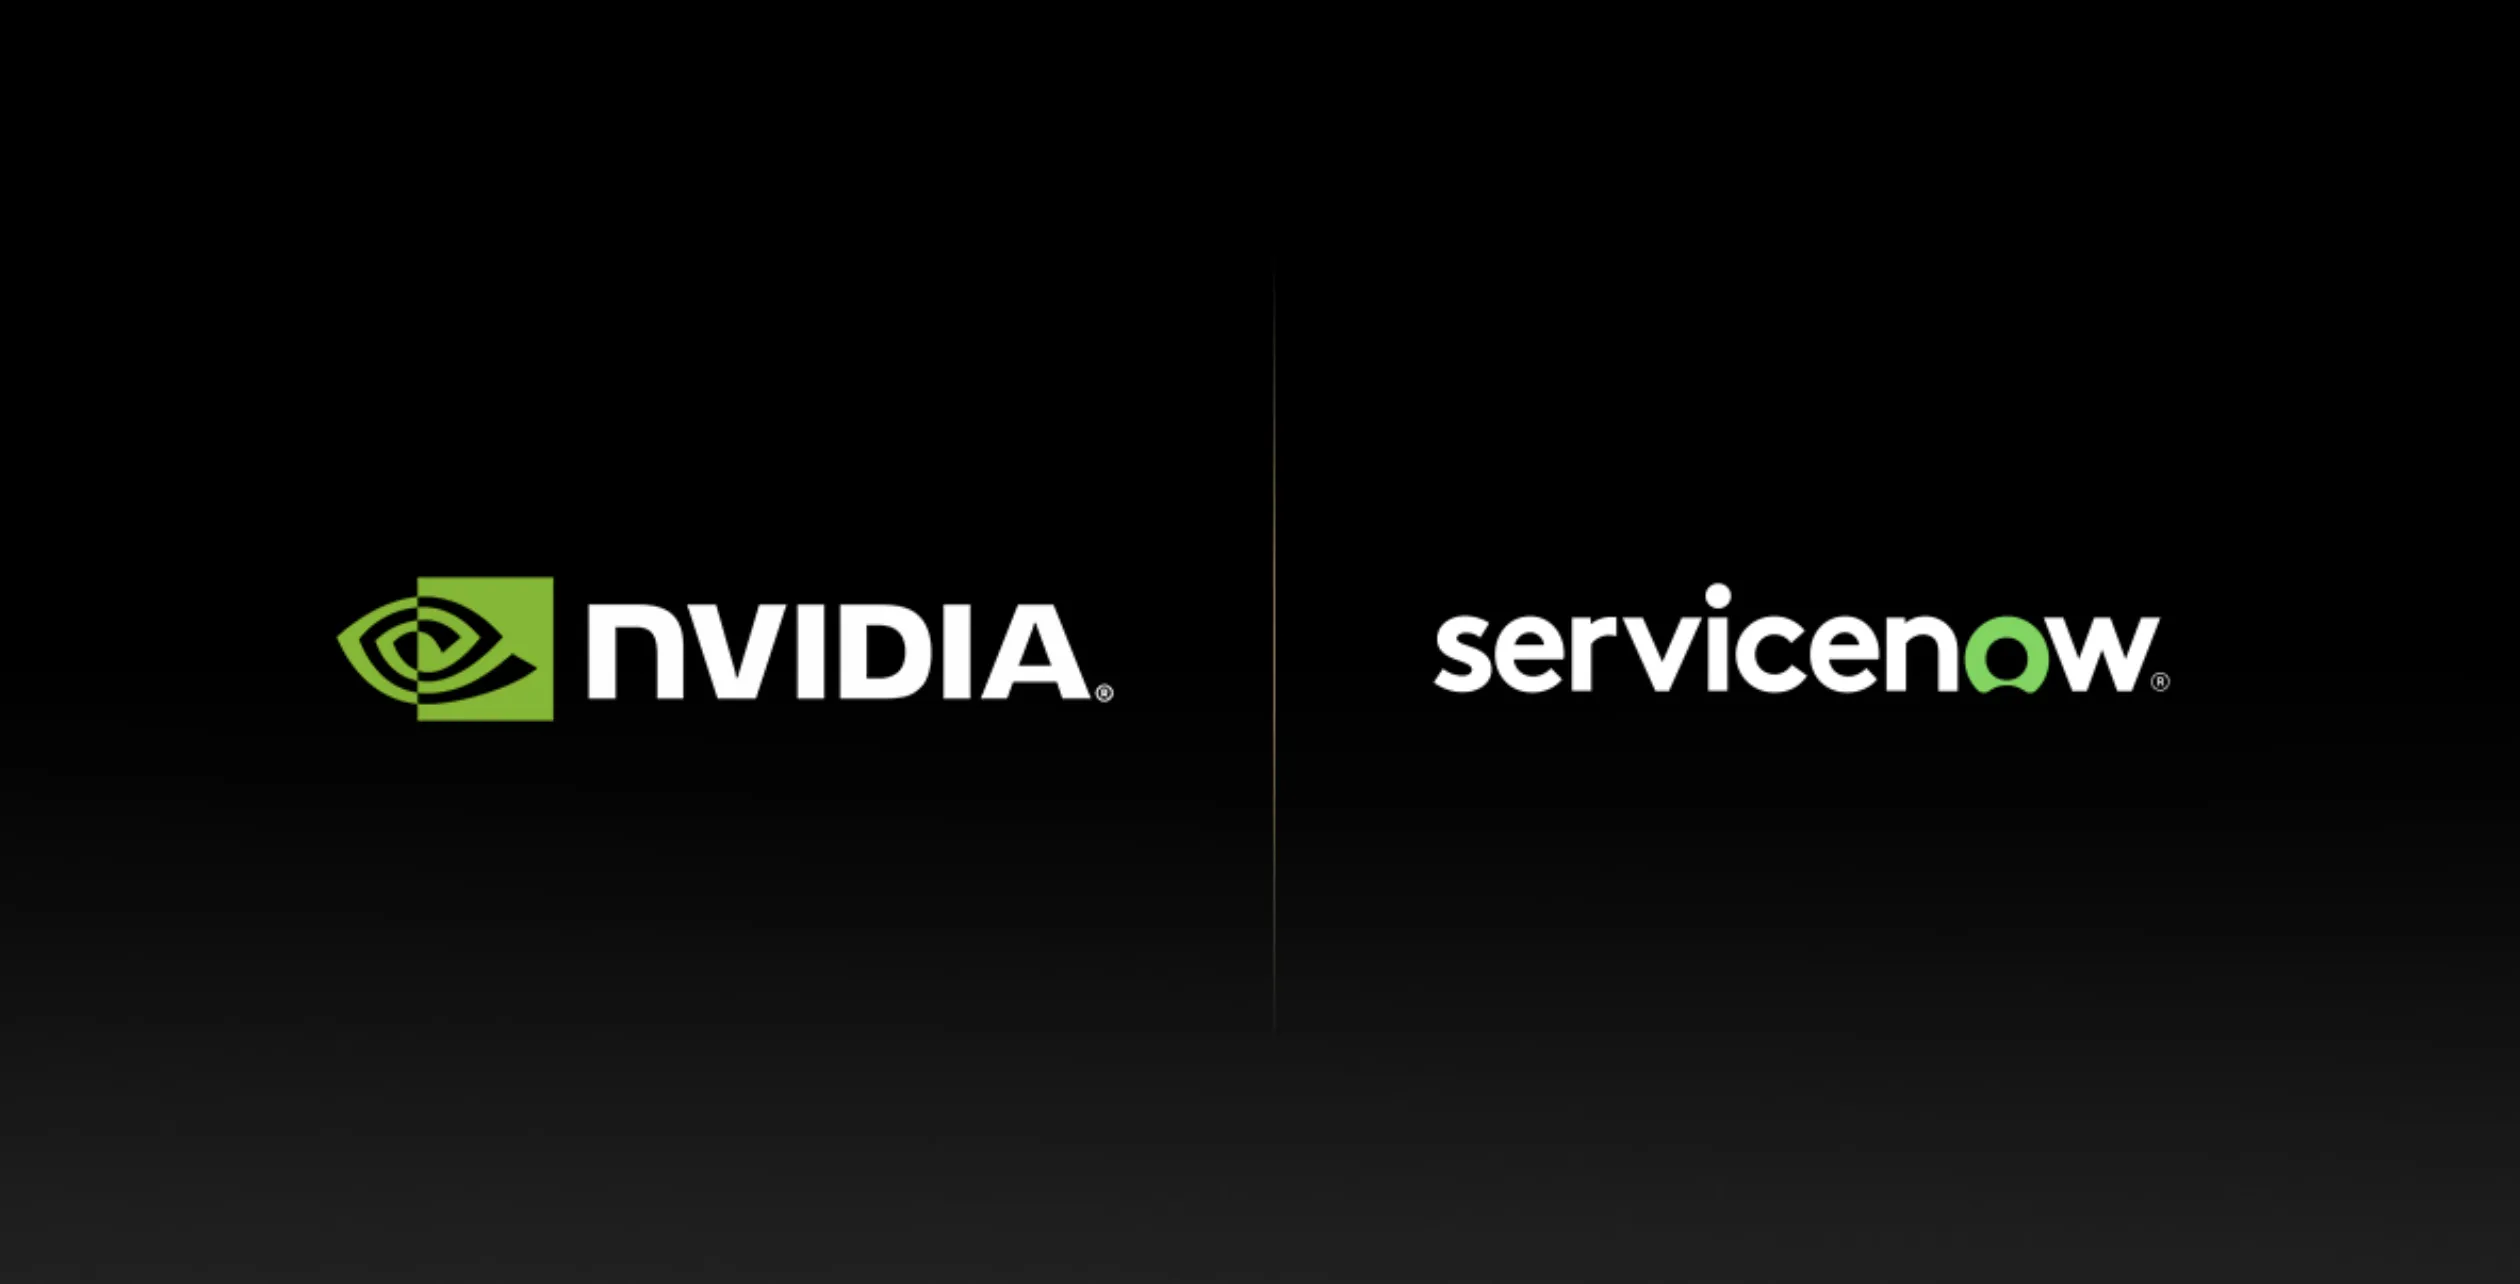 NVIDIAとServiceNowがKnowledge 24で披露した未来のAI駆動デジタルアバター